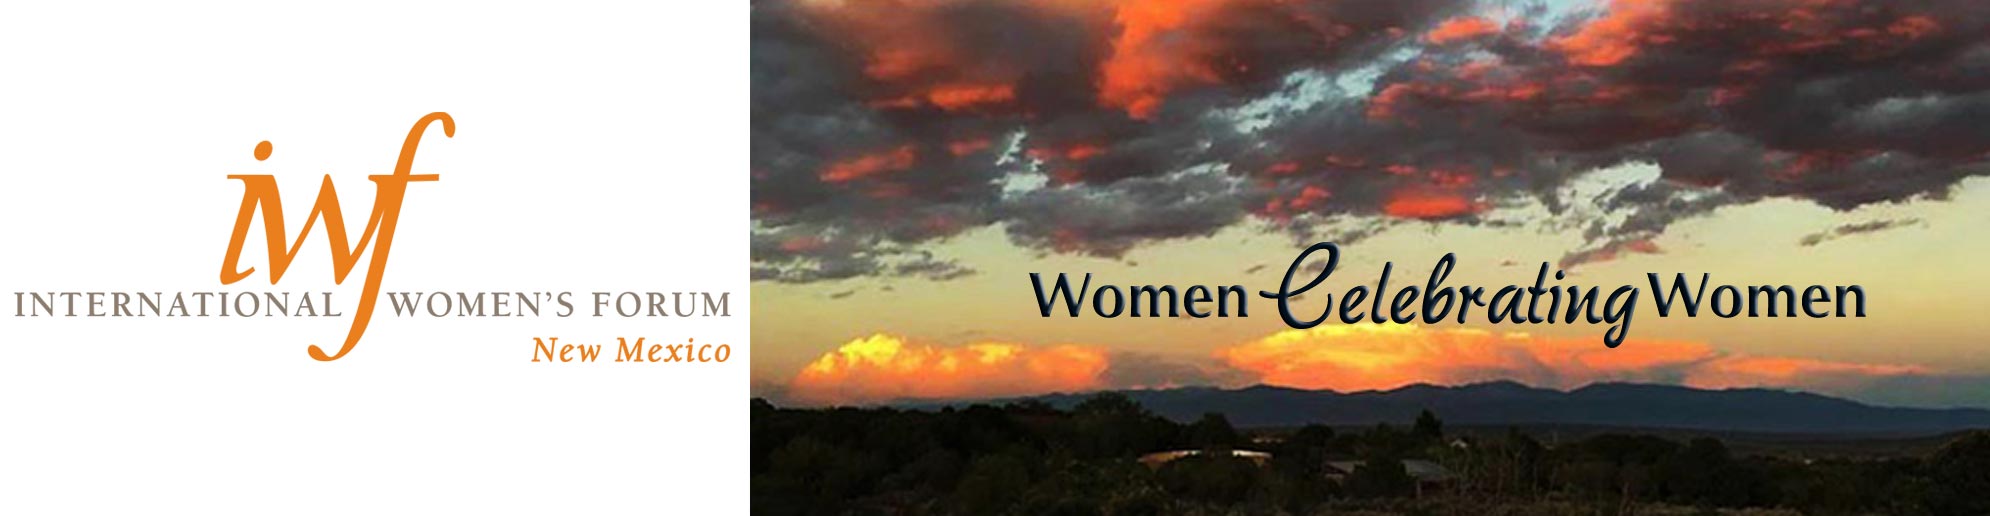 International Women's Forum - New Mexico